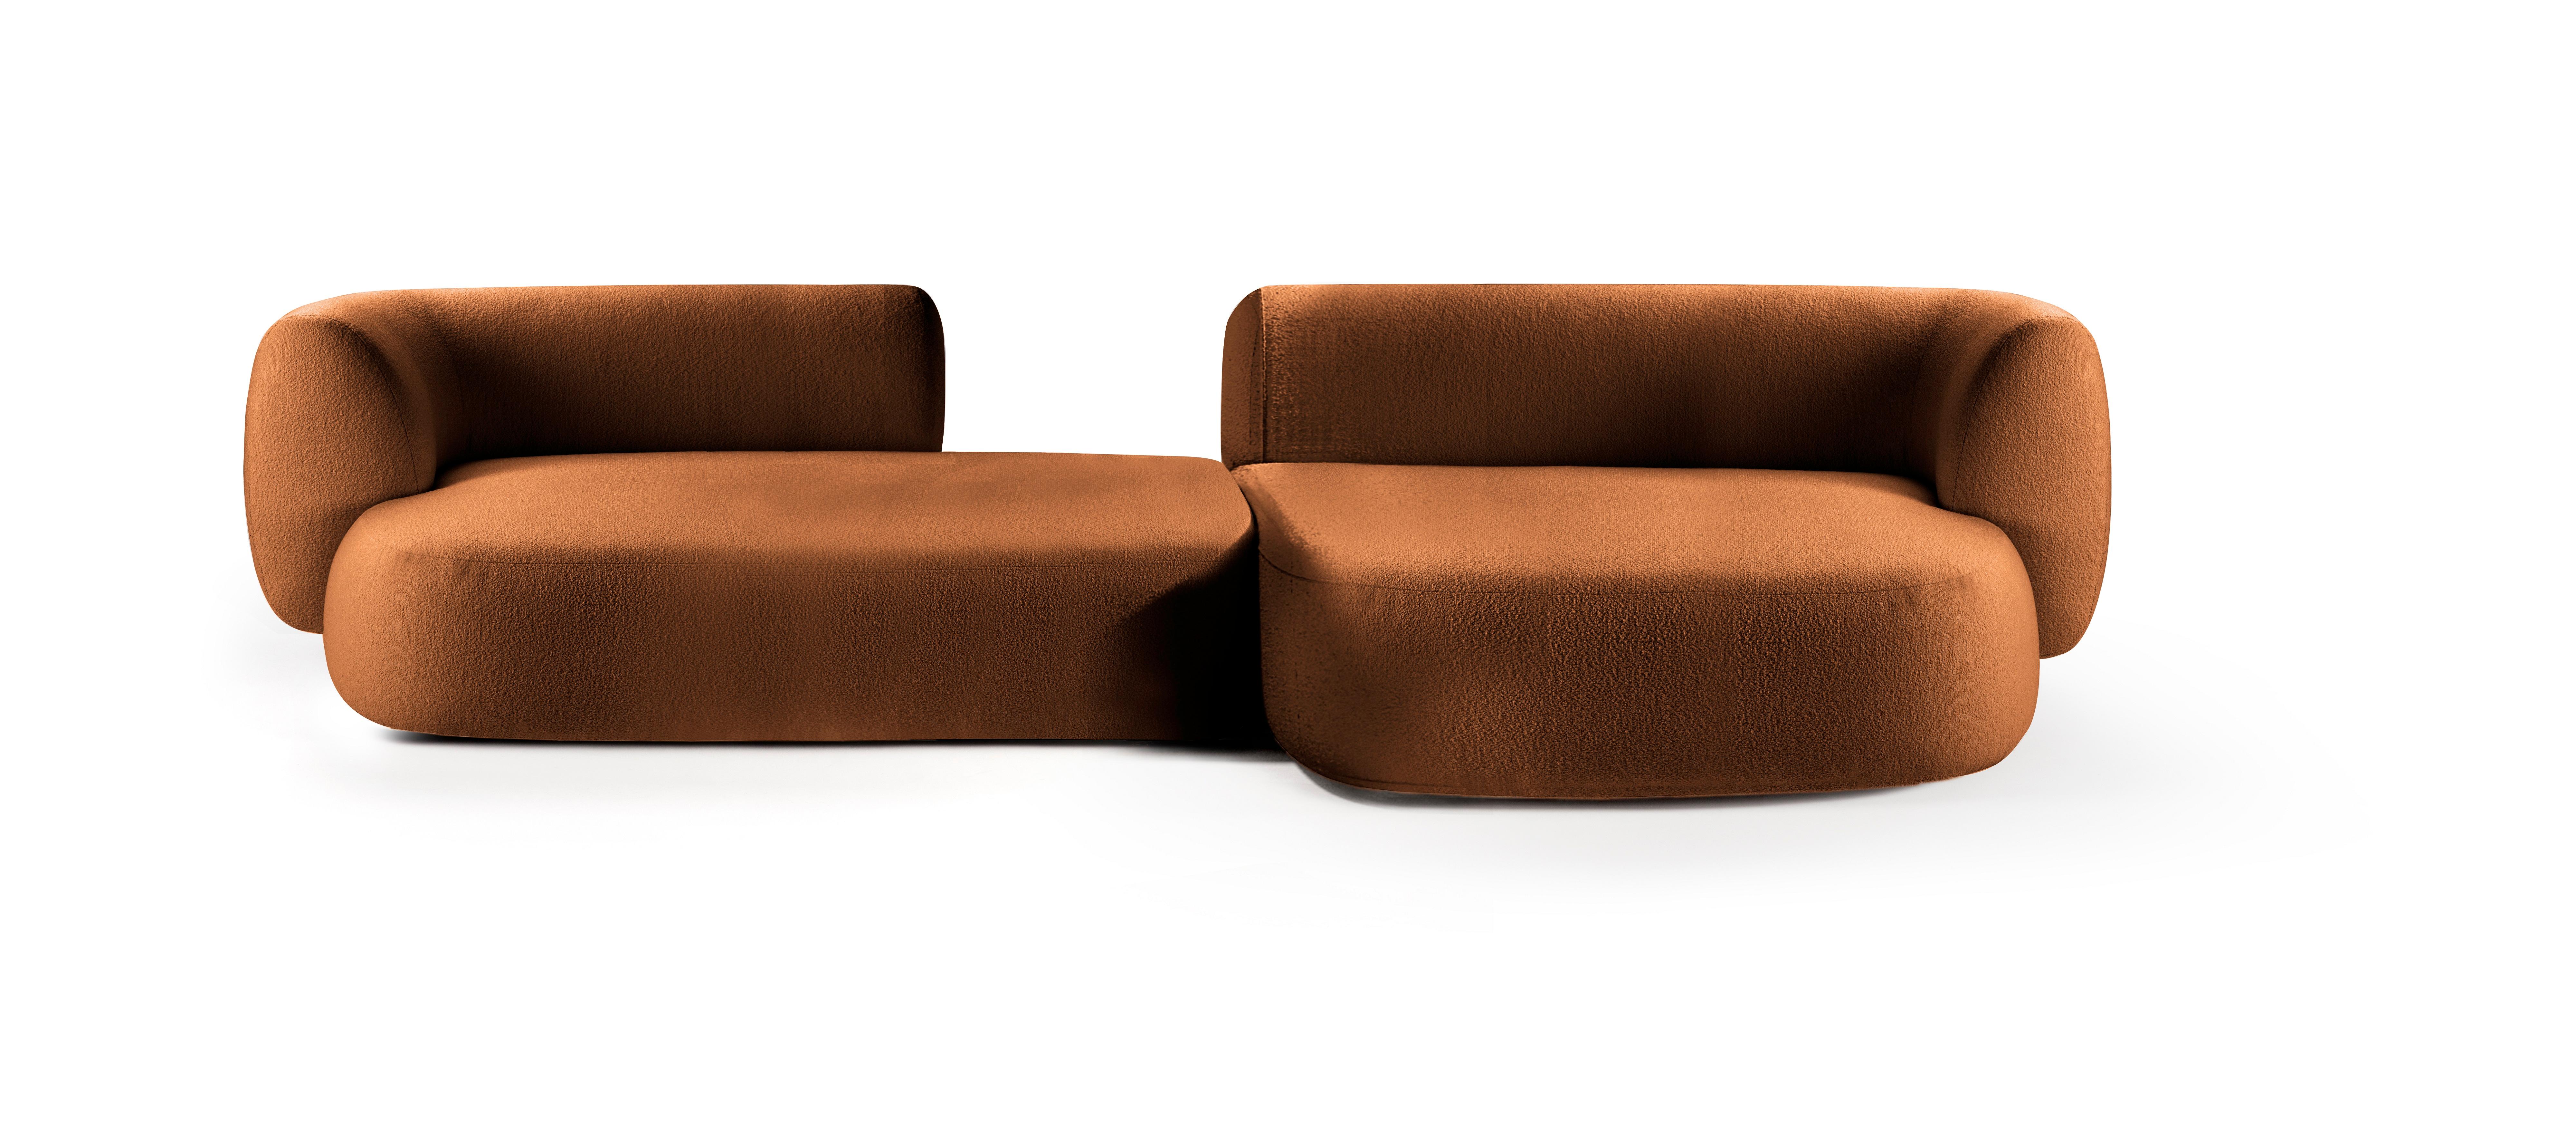 Hug modular sofa by Collector
Dimensions: W 330 x D 160 x H 74 cm.
DX terminal element gap module: W 180 x D 98 cm x H 74.
Chaise longue XL module: W 150 x D 160 x H 74 cm.
Materials: fabric, solid oak wood.

This sofa is composed of one DX